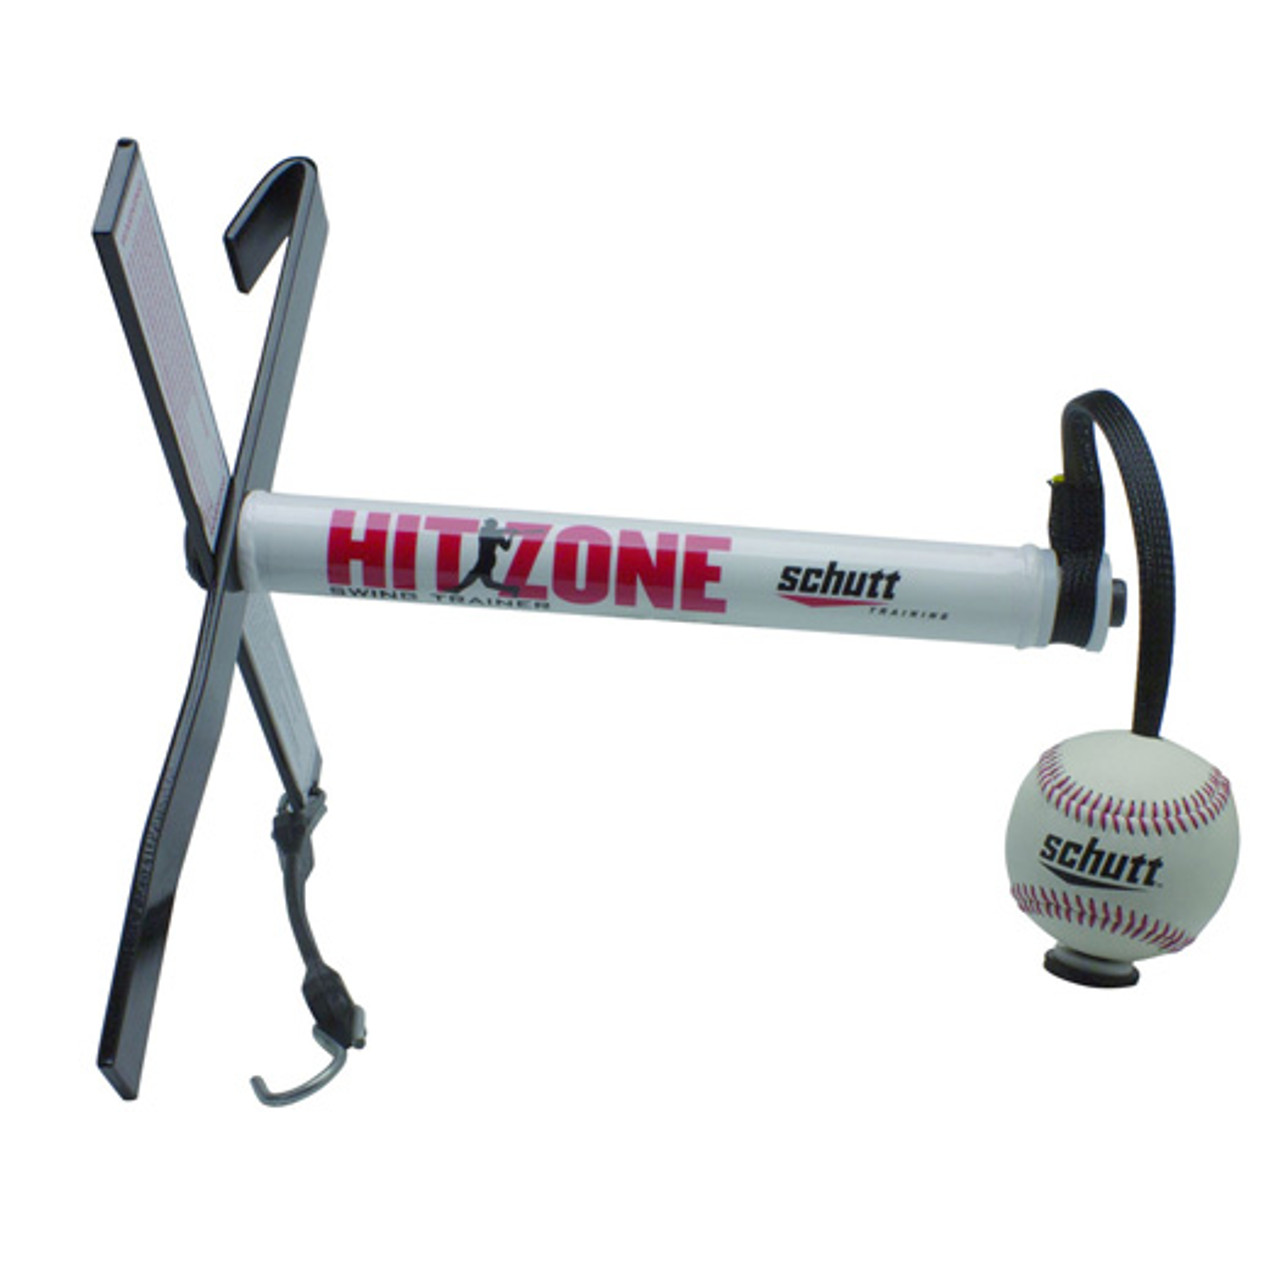 Schutt Hit Zone Baseball Swing Trainer 12912500